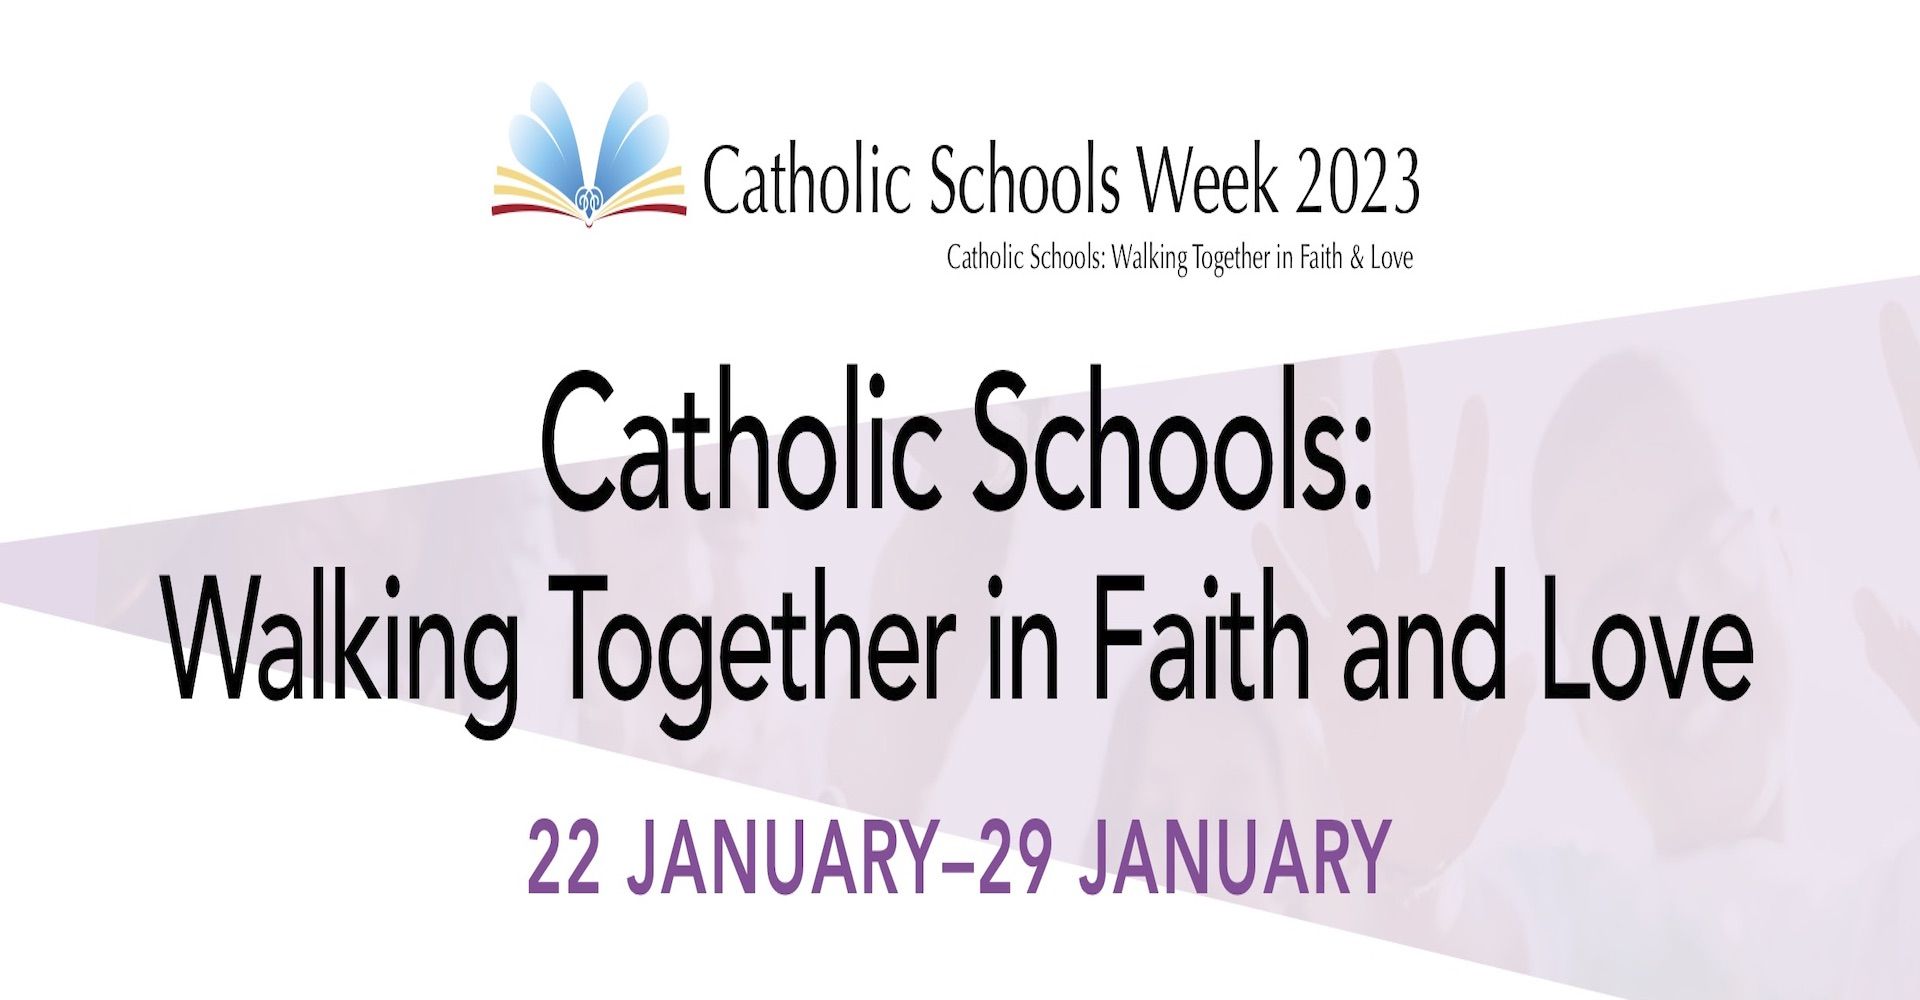 Resources for celebrating Catholic schools Week